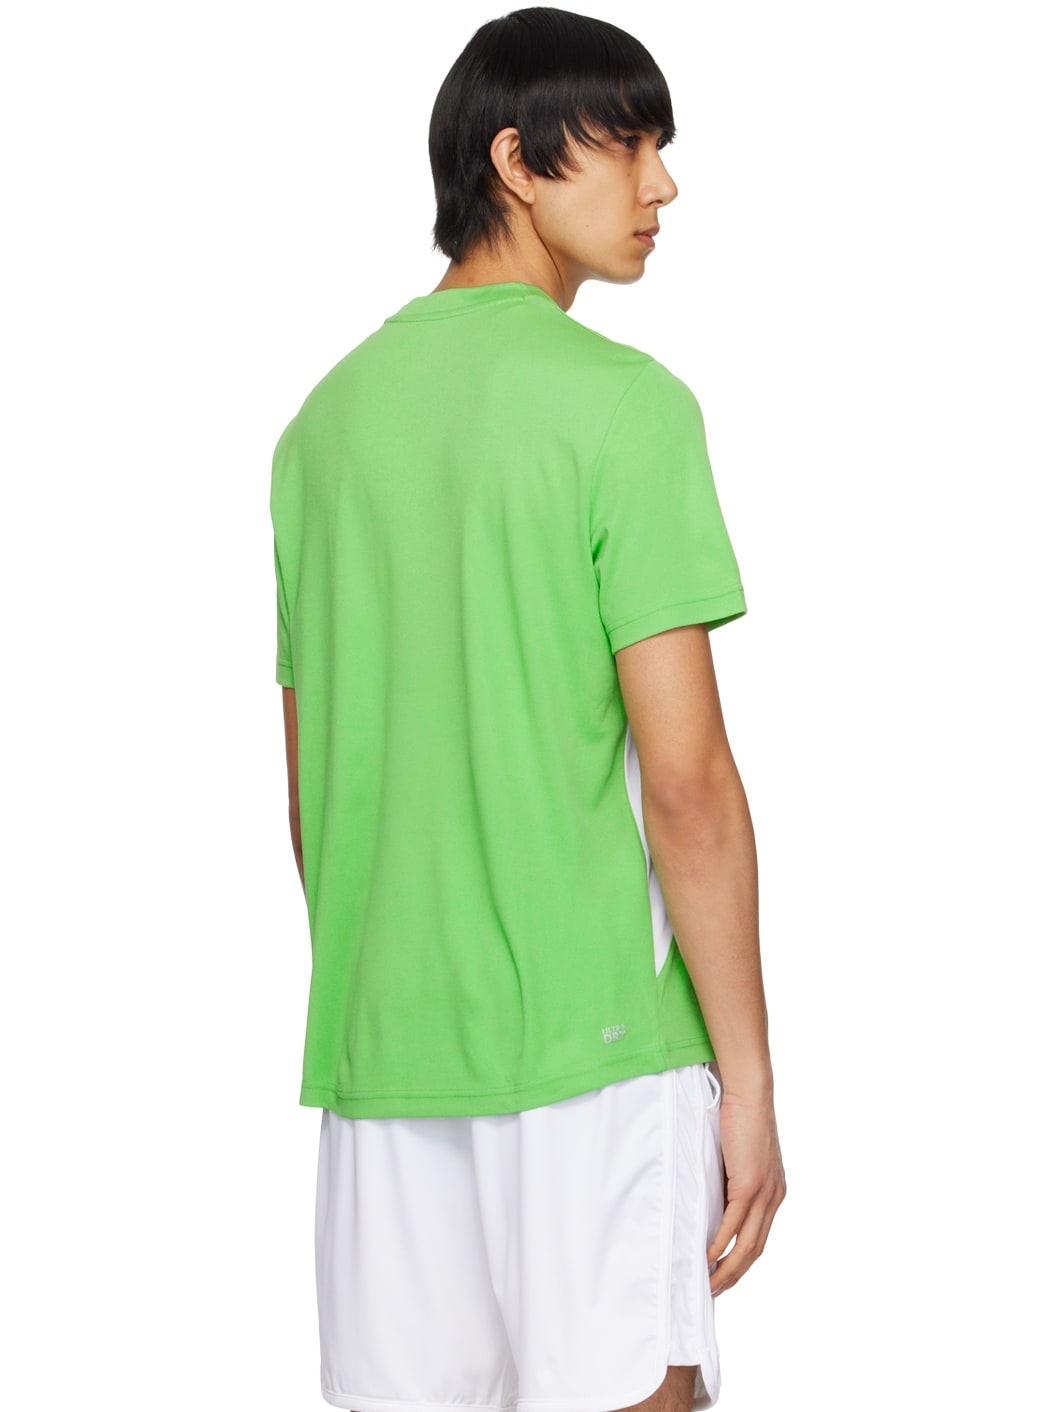 Green Novak Djokovic Edition T-Shirt - 3